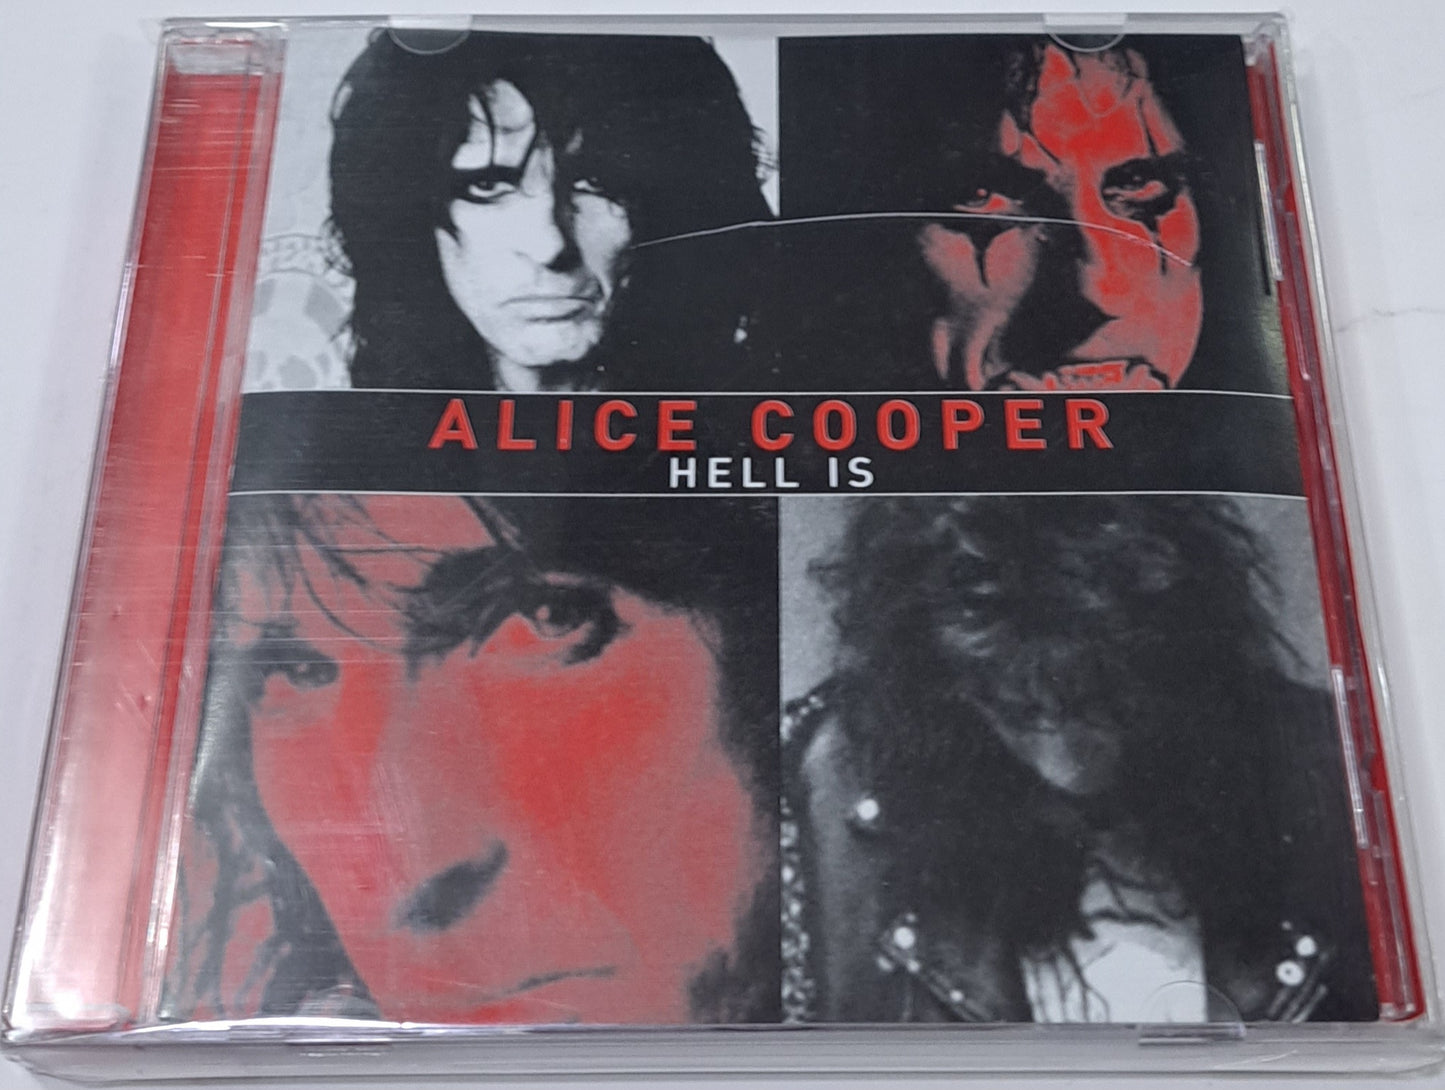 ALICE COOPER - HELL IS  CD